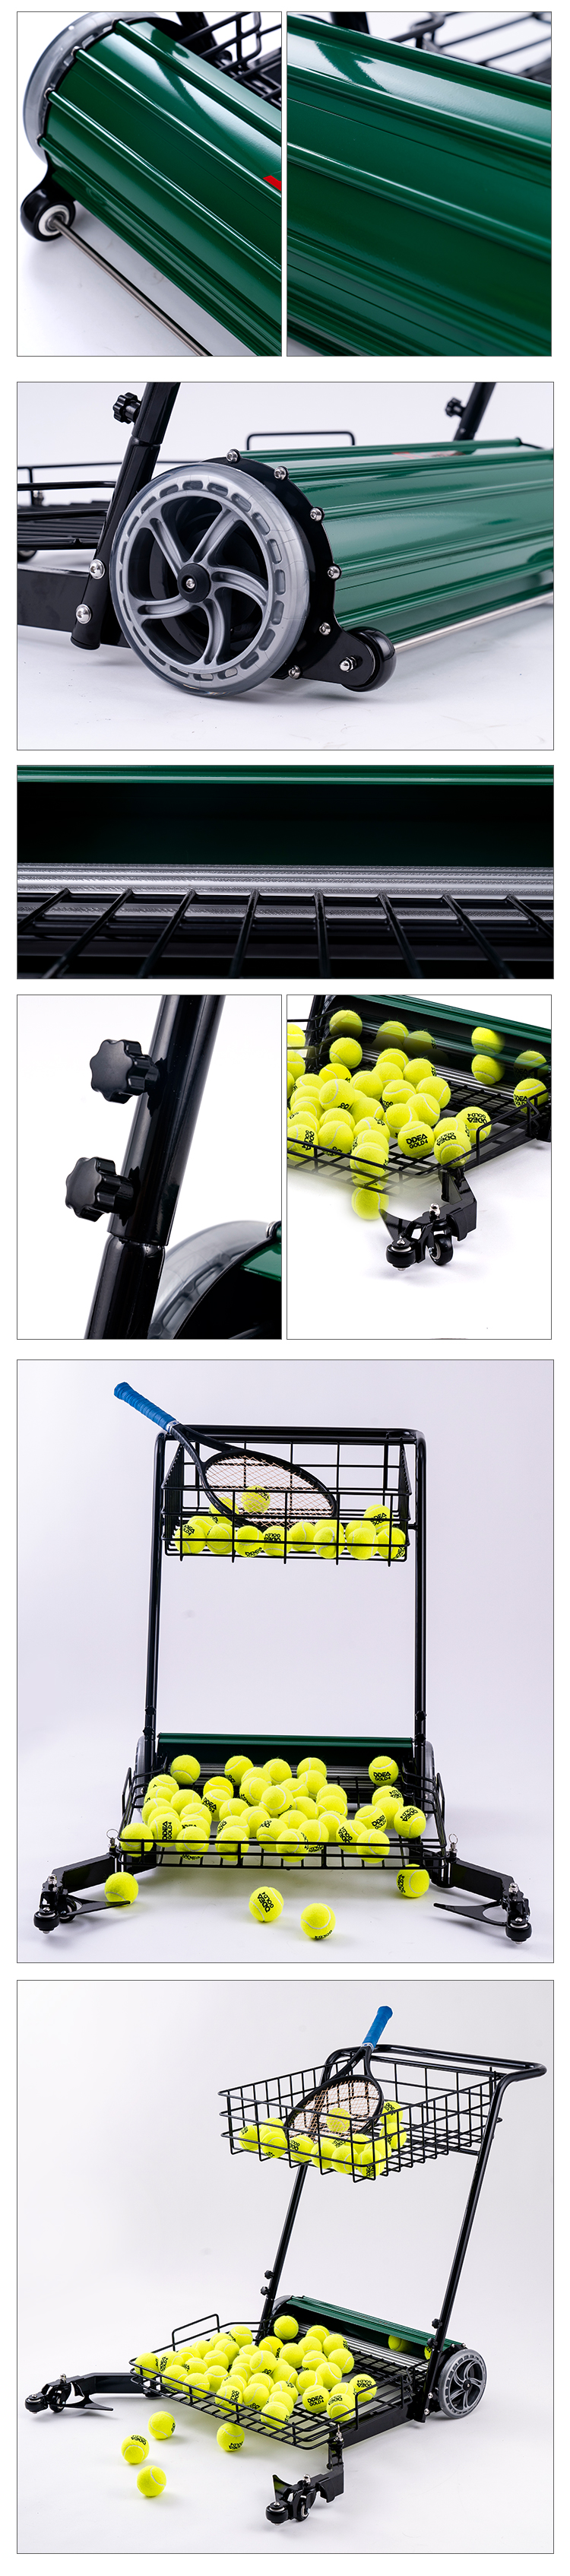 Injin wasan tennis (7)